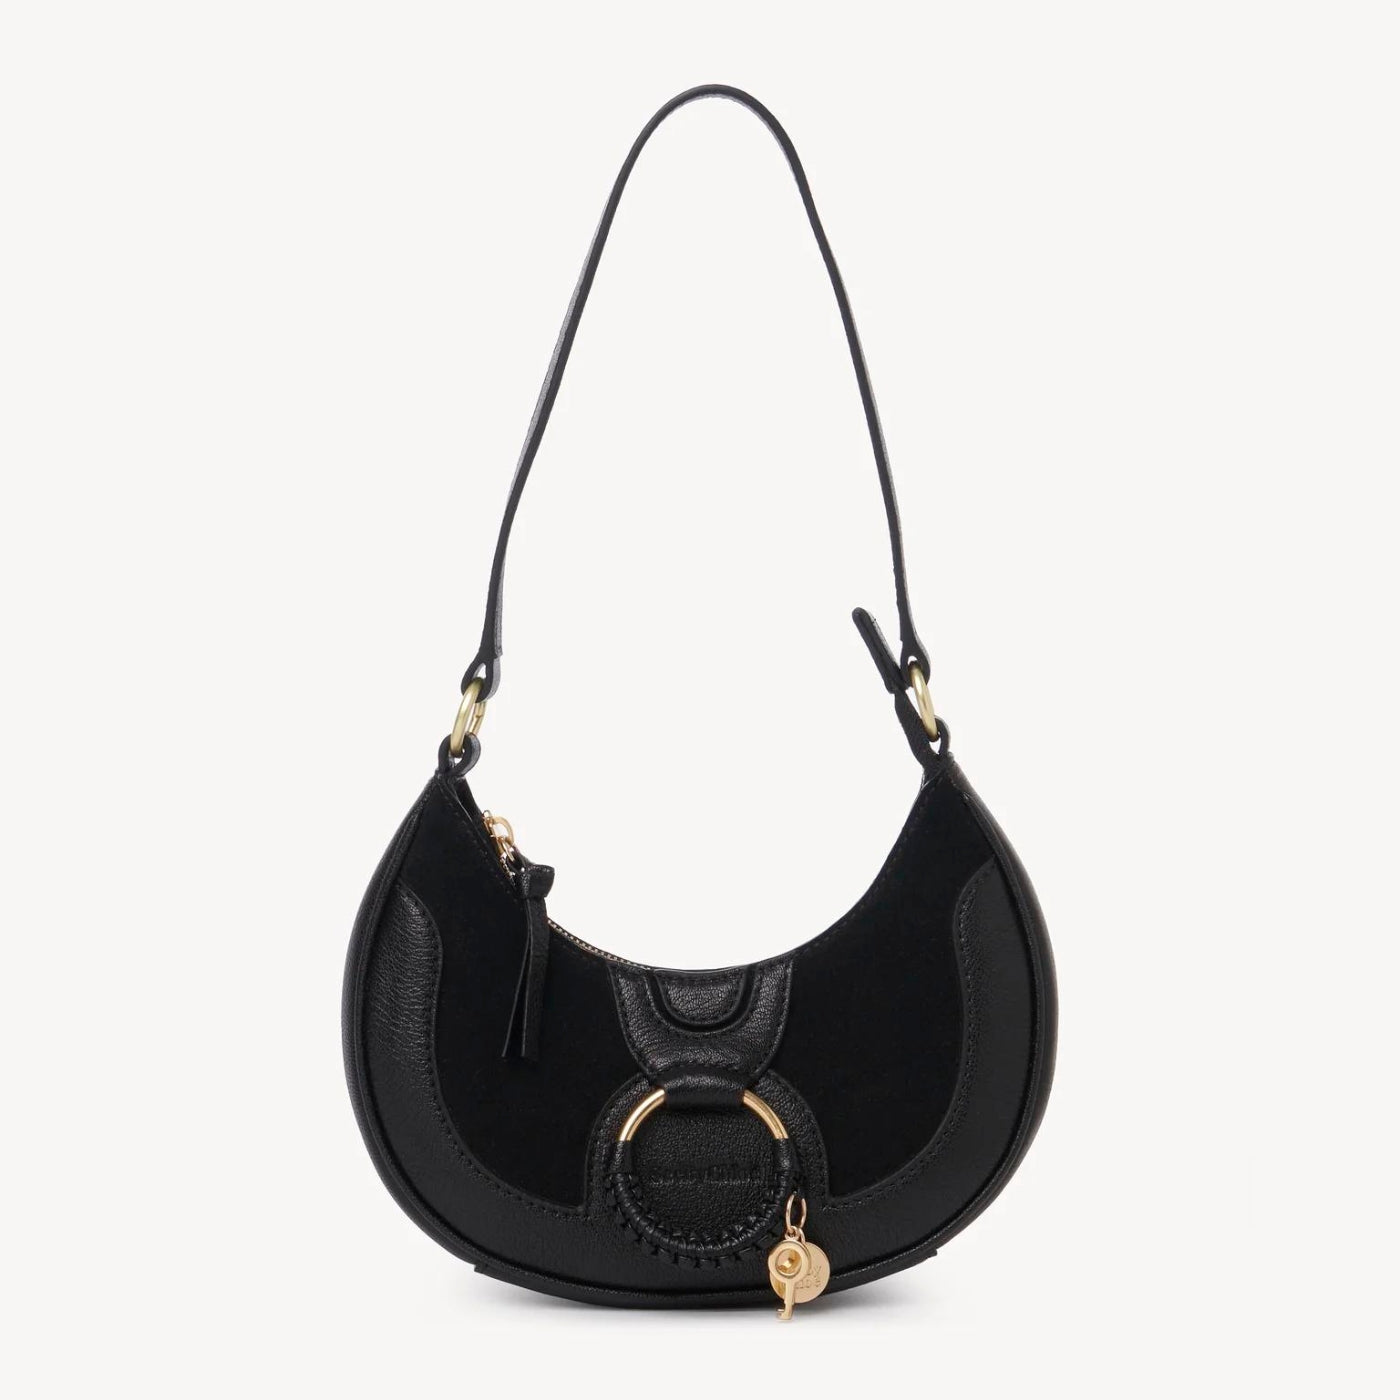 Hana Half Moon Bag in Black Handbags SEE BY CHLOE - LOLAMIR